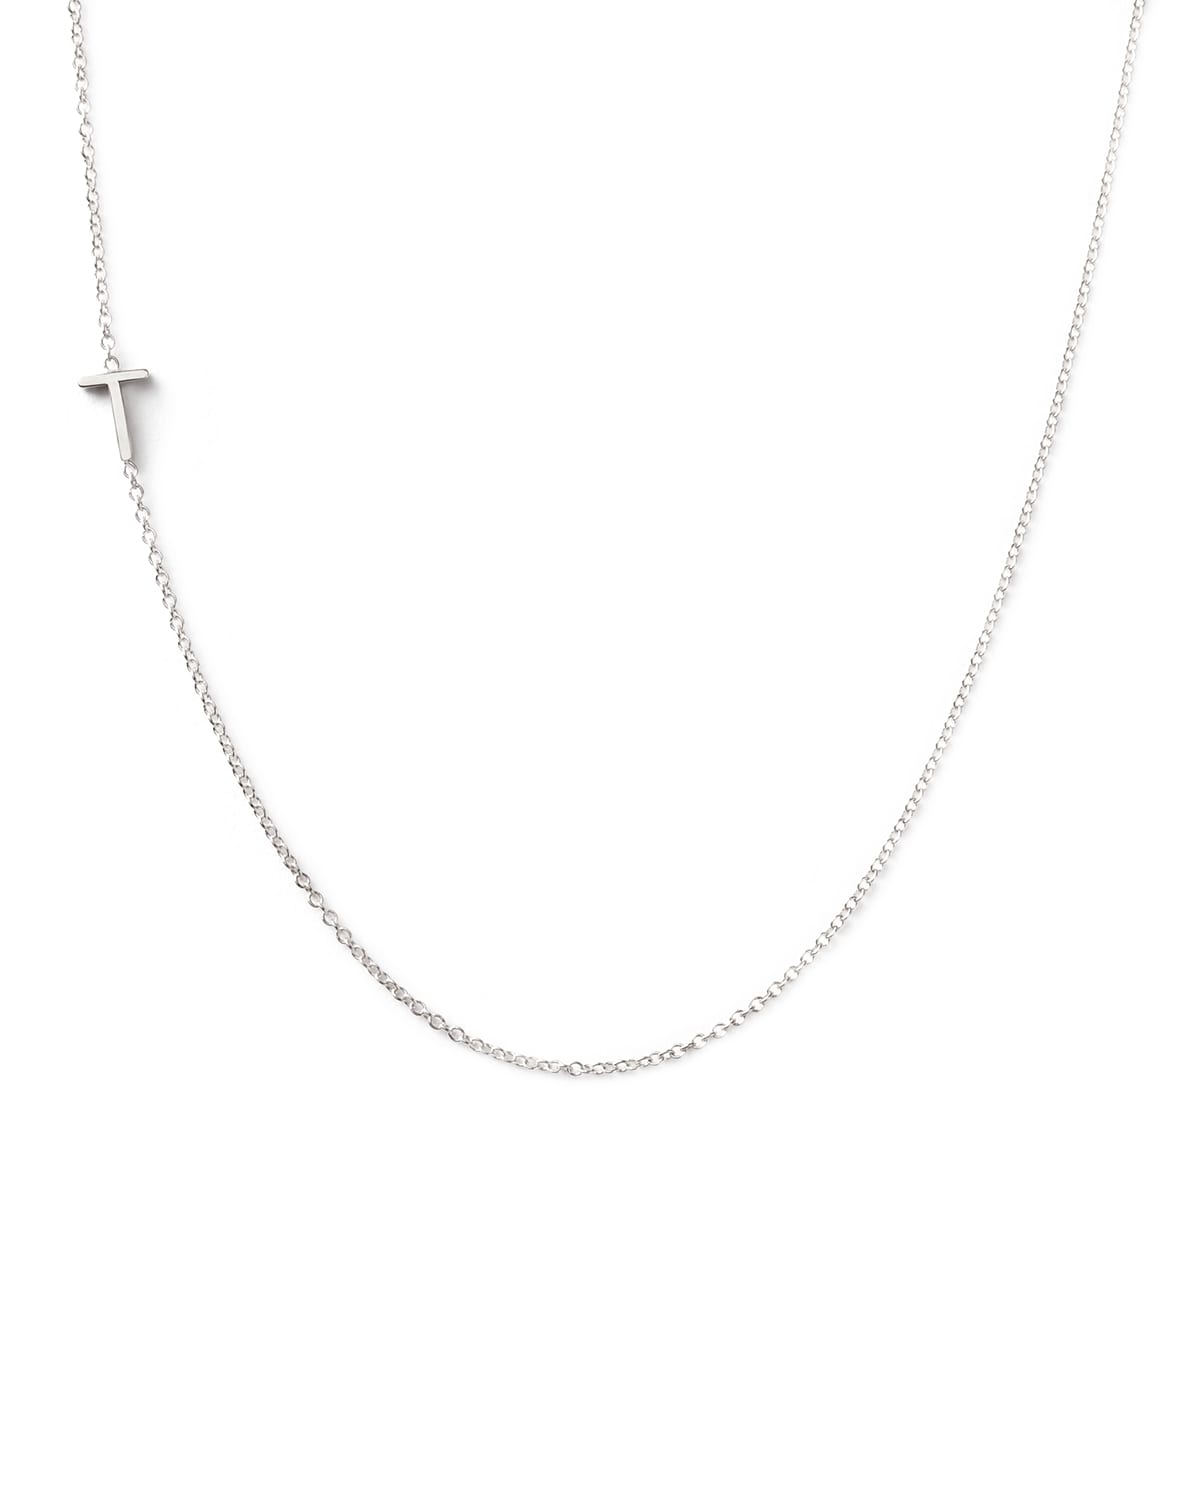 Maya Brenner Designs 14k White Gold Mini Letter Necklace In T